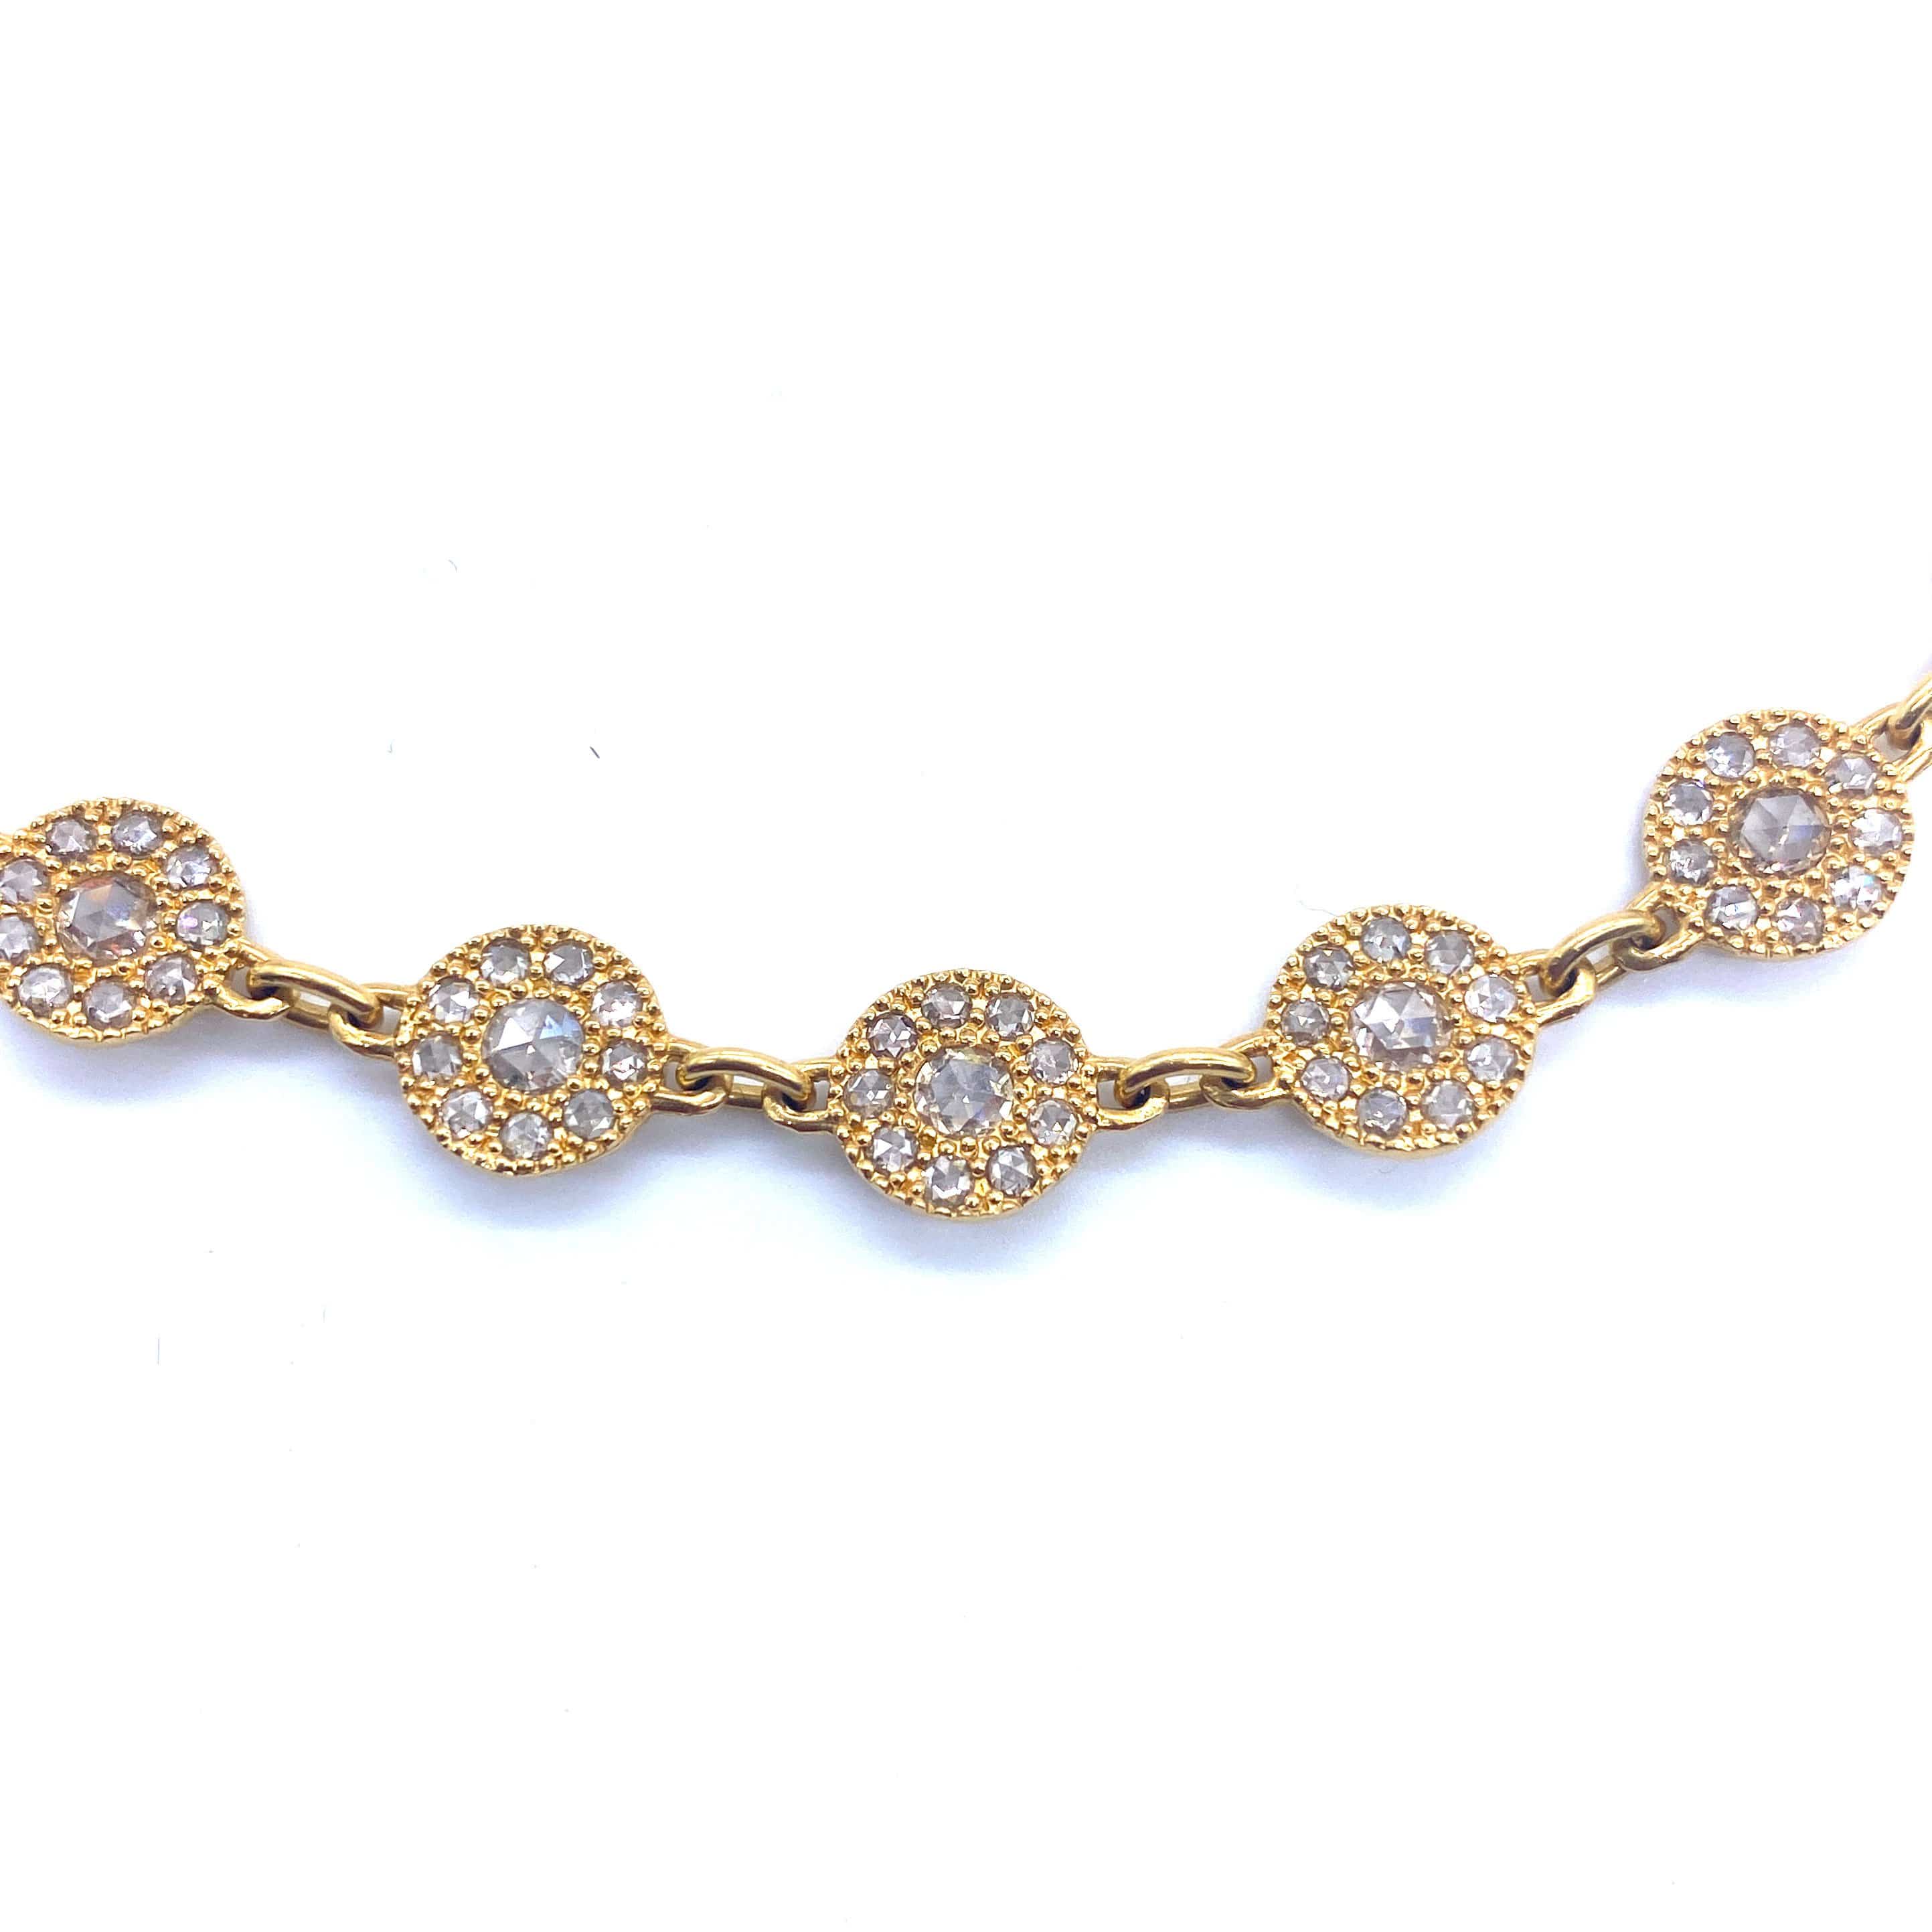 Eternity 20K “Opera” Necklace with Diamonds - Coomi